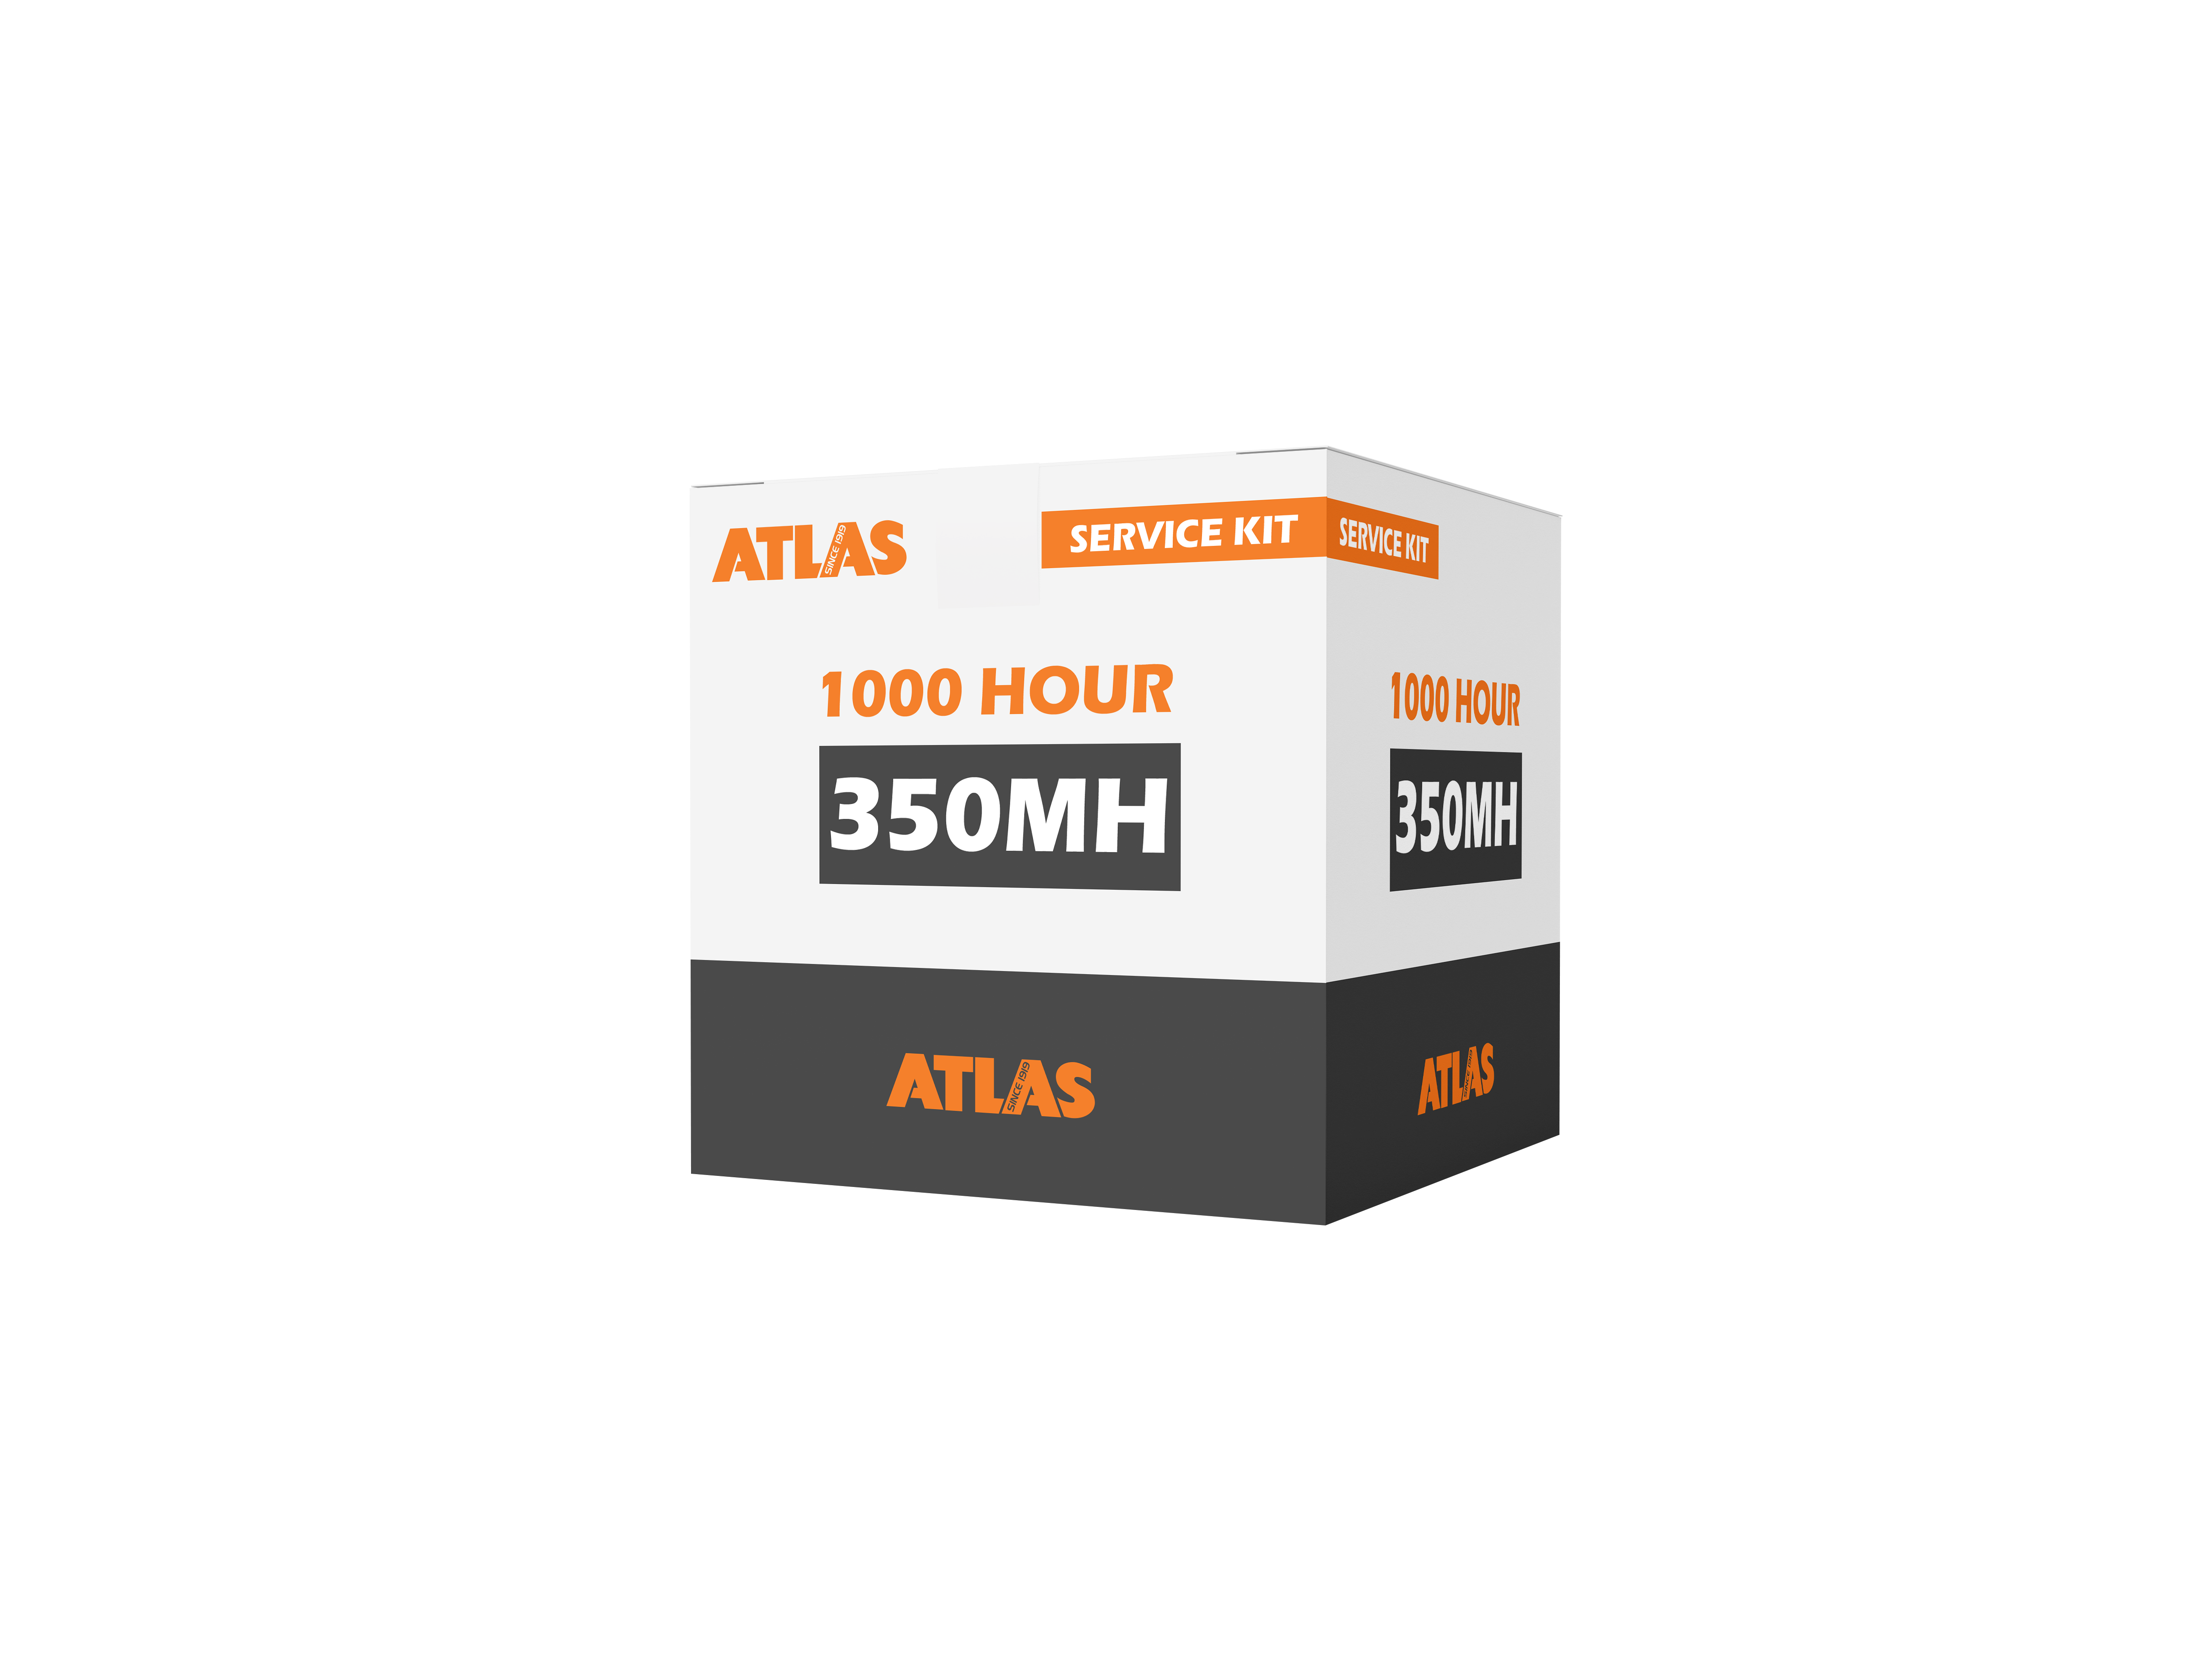 Atlas 350MH 1000 Hour Service Kit (350 series)